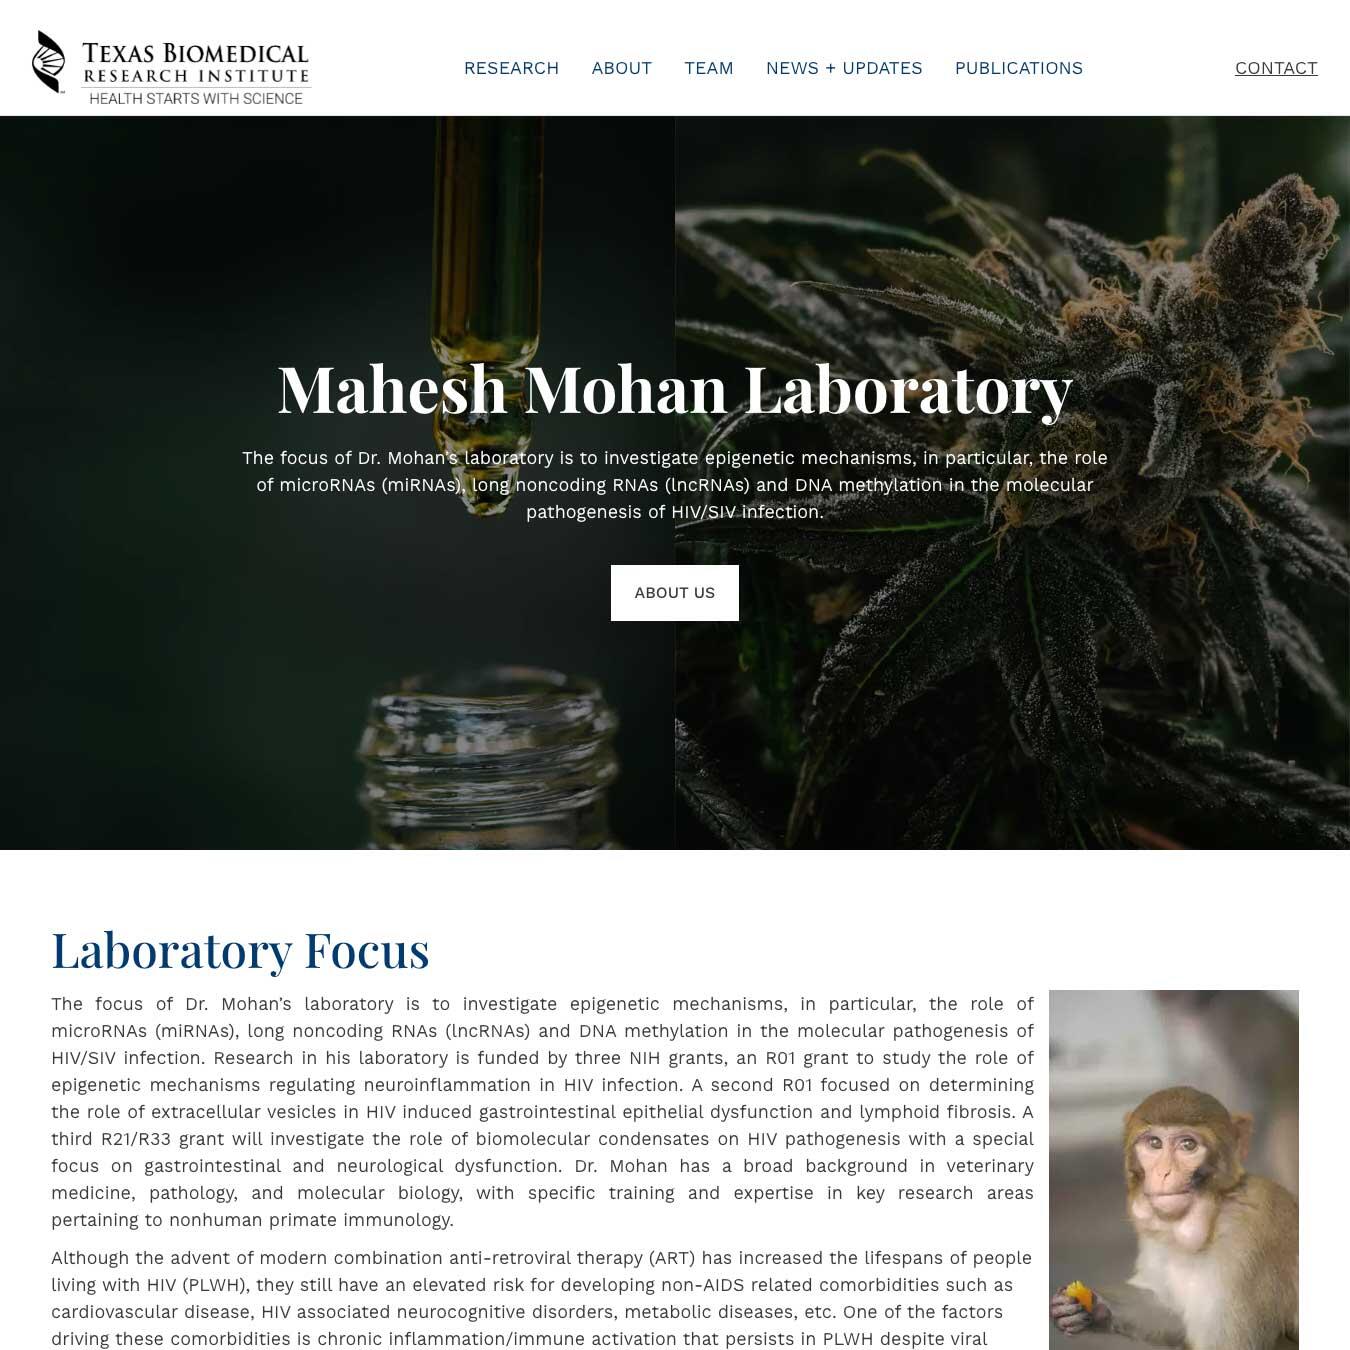 Mahesh Mohan Laboratory website